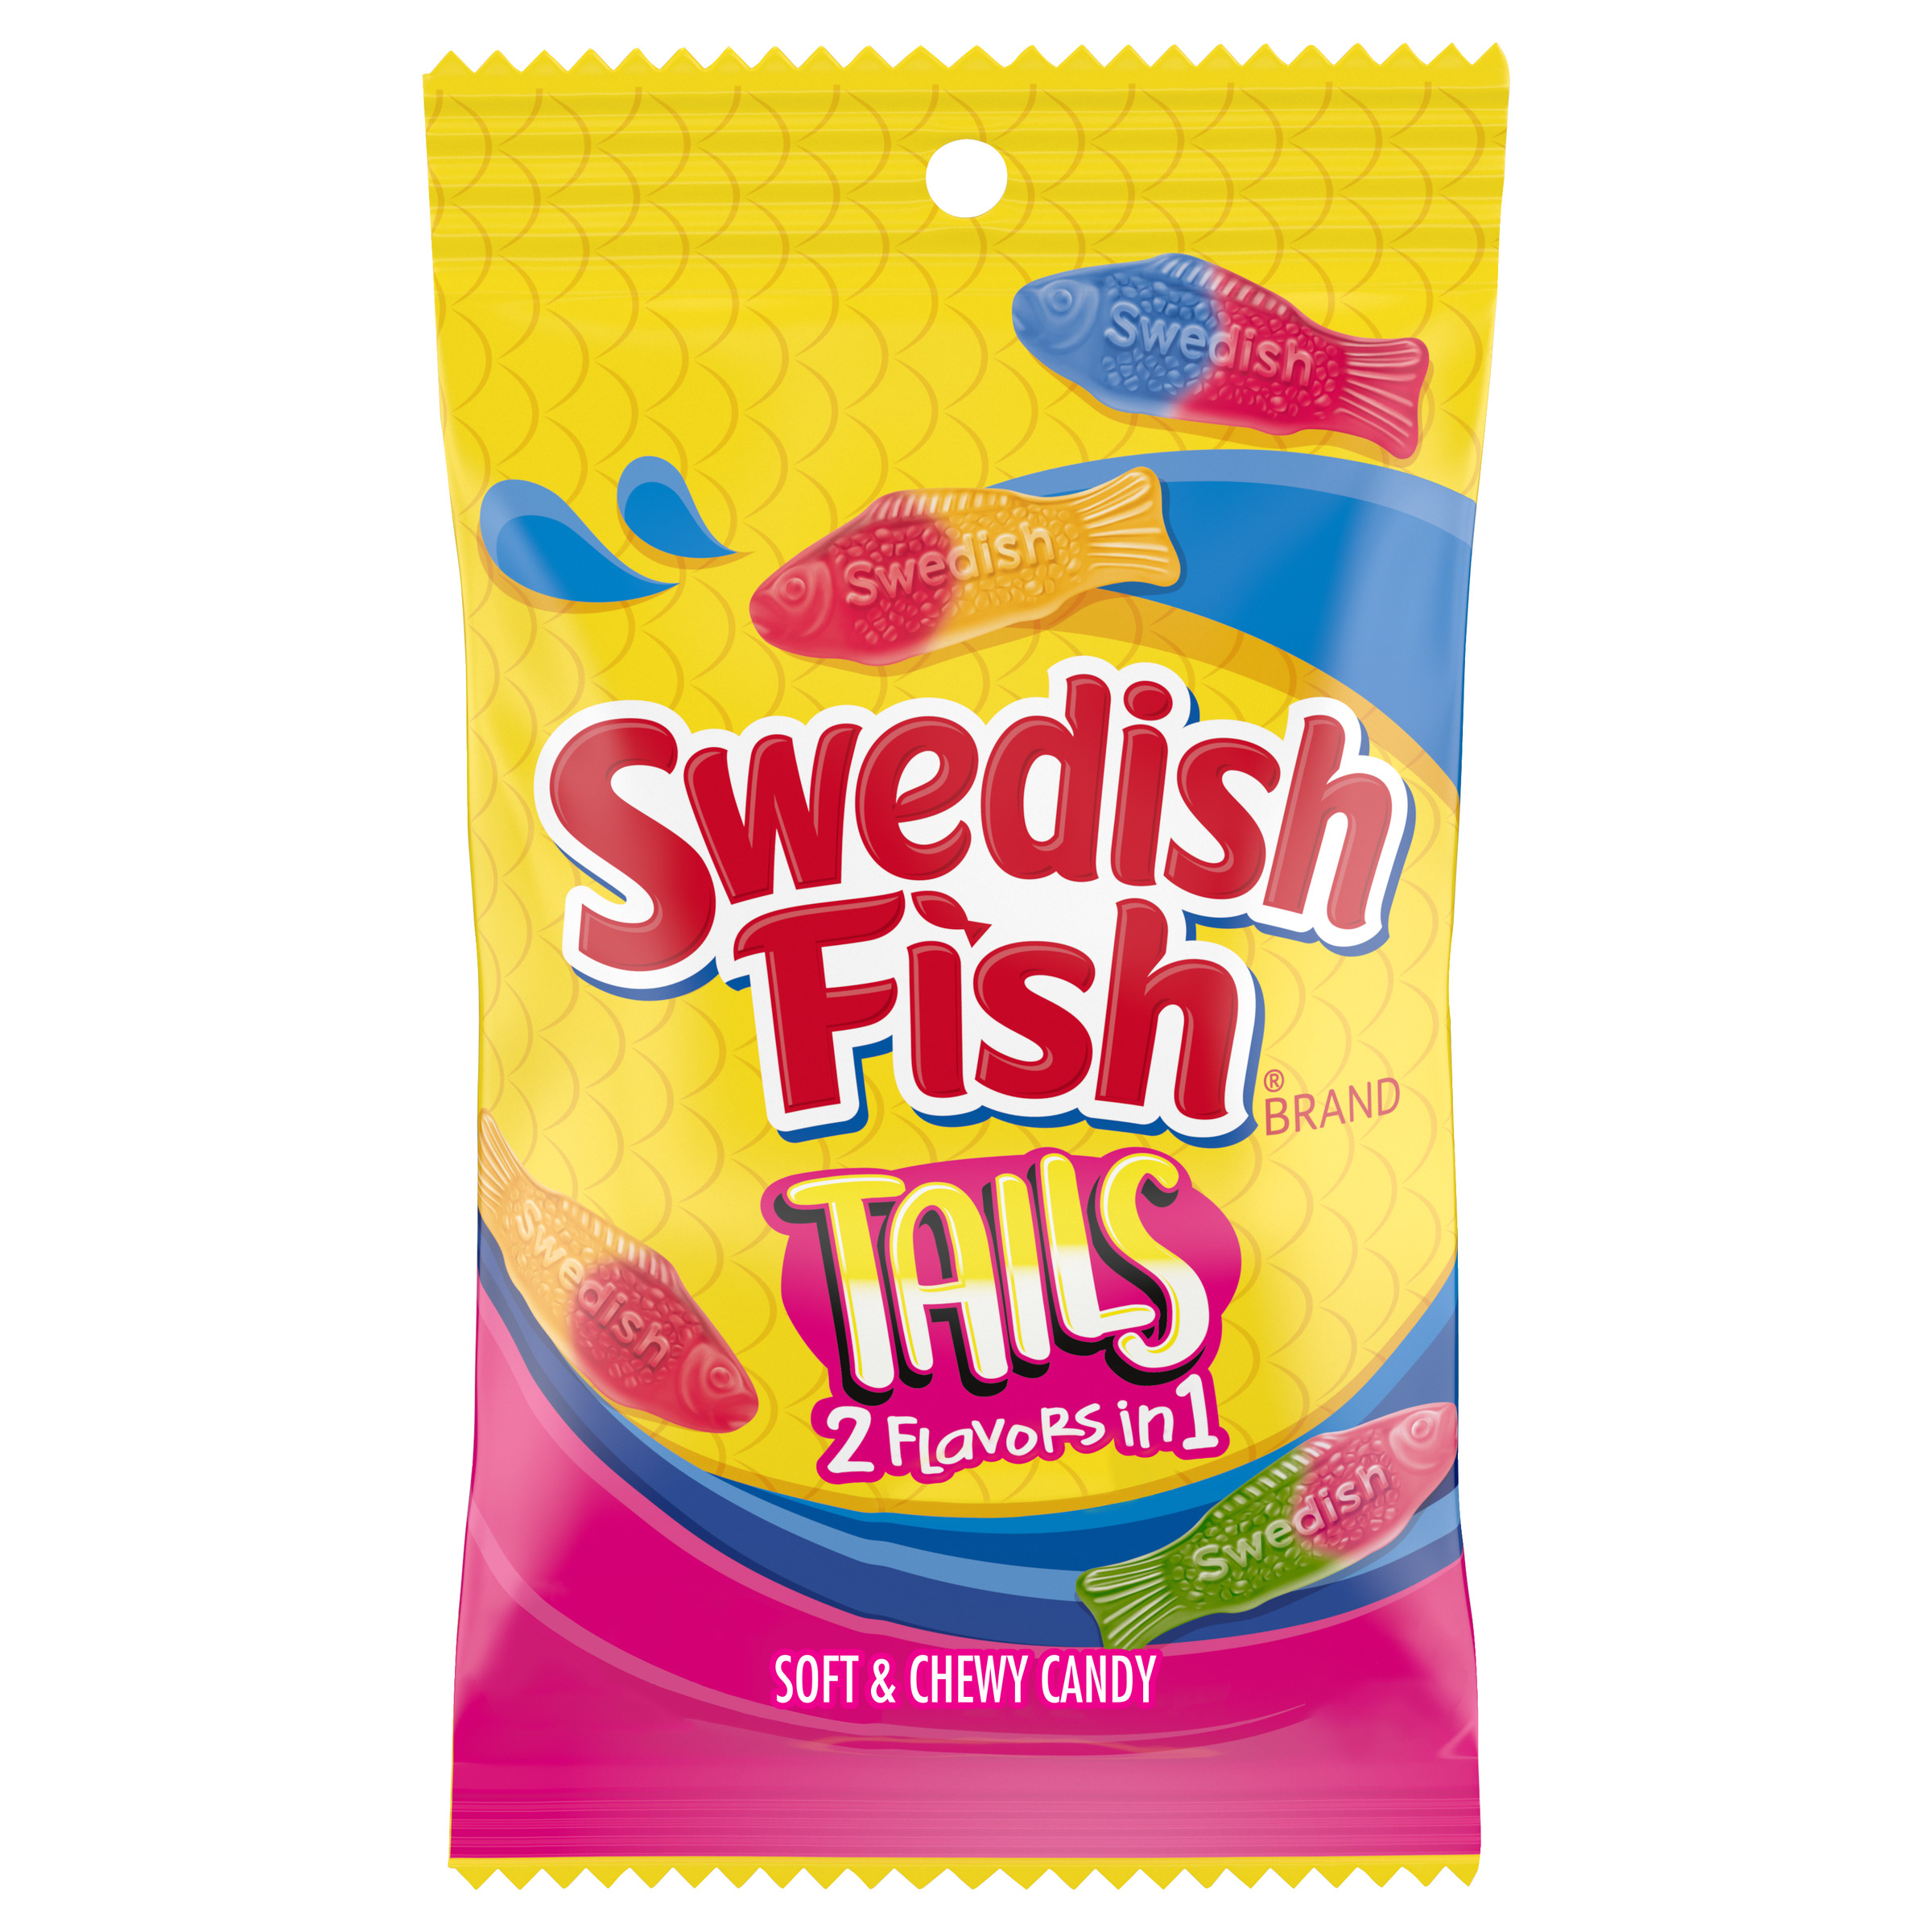 SWEDISH FISH Tails Tails Soft Candy 8 oz